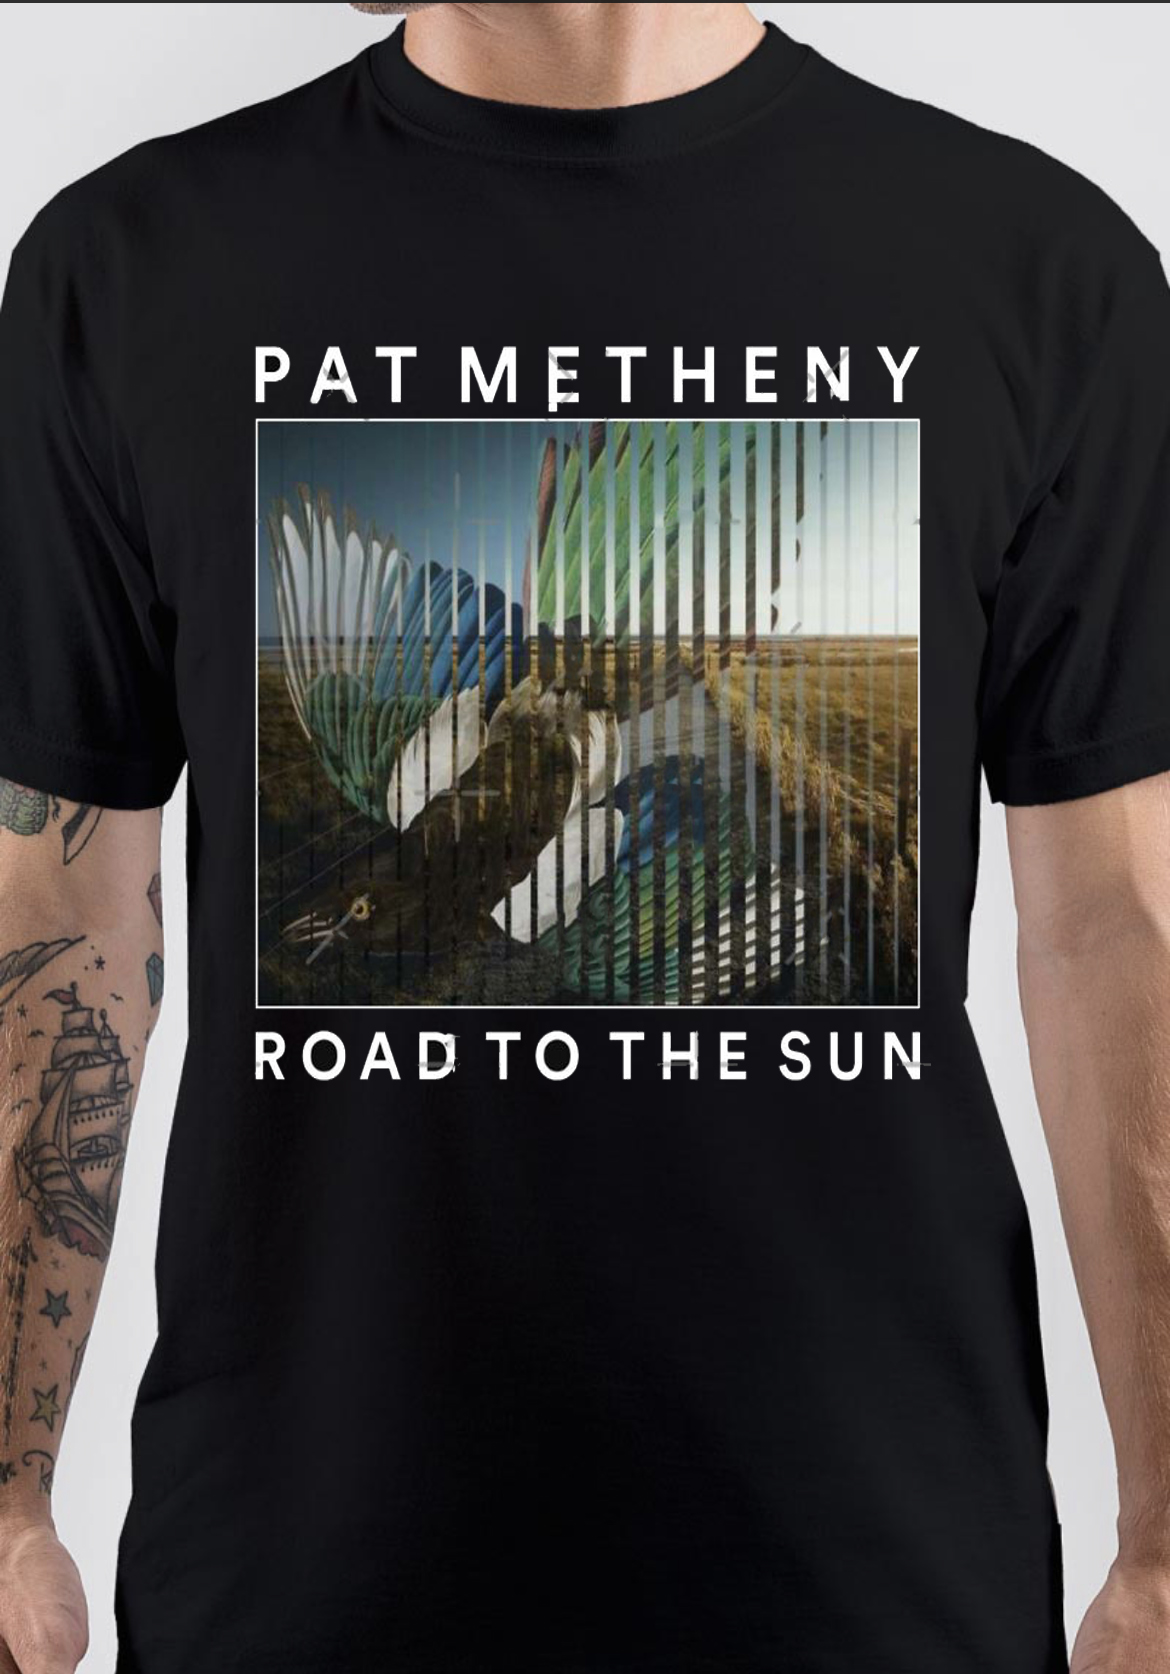 pat metheny tour shirt